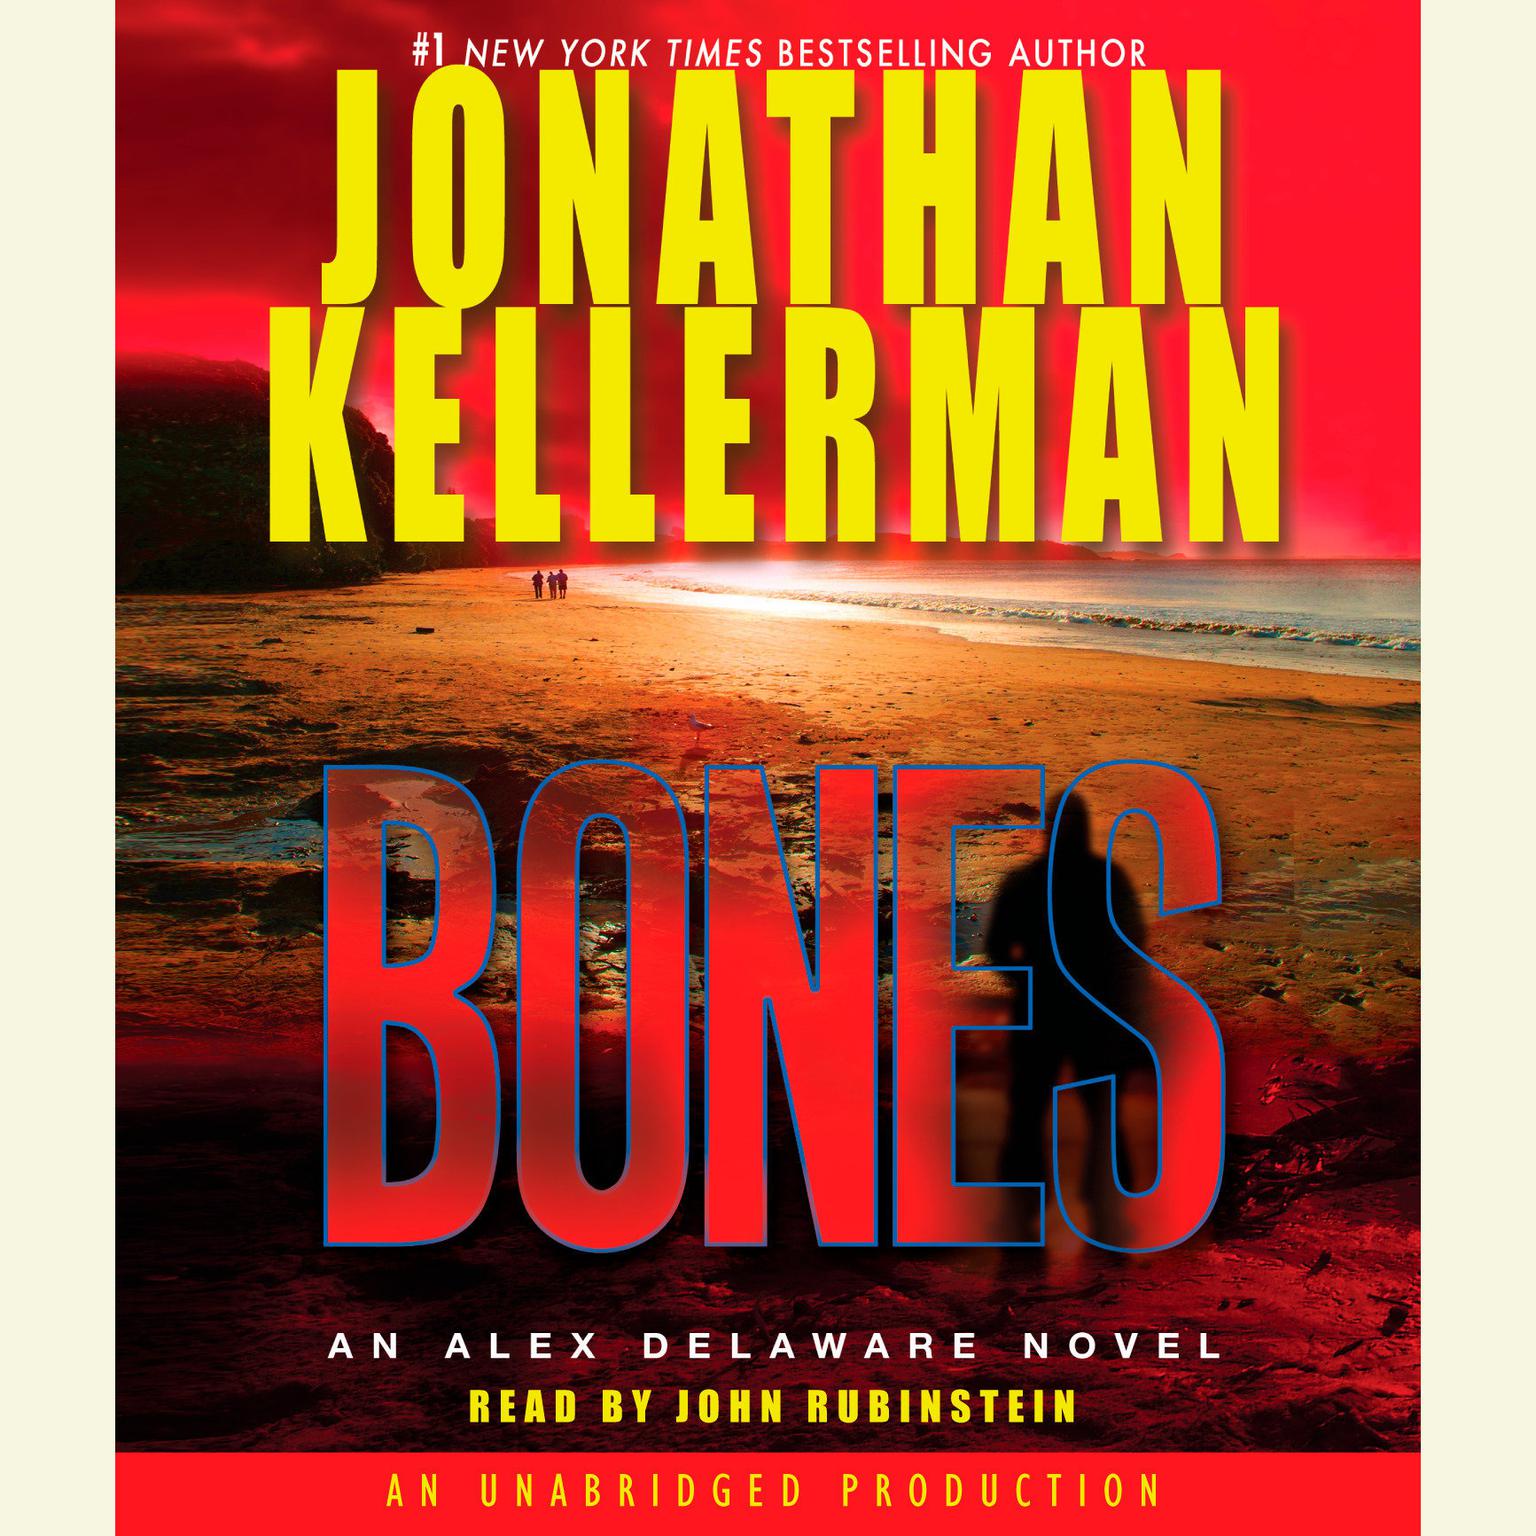 Bones: An Alex Delaware Novel Audiobook, by Jonathan Kellerman